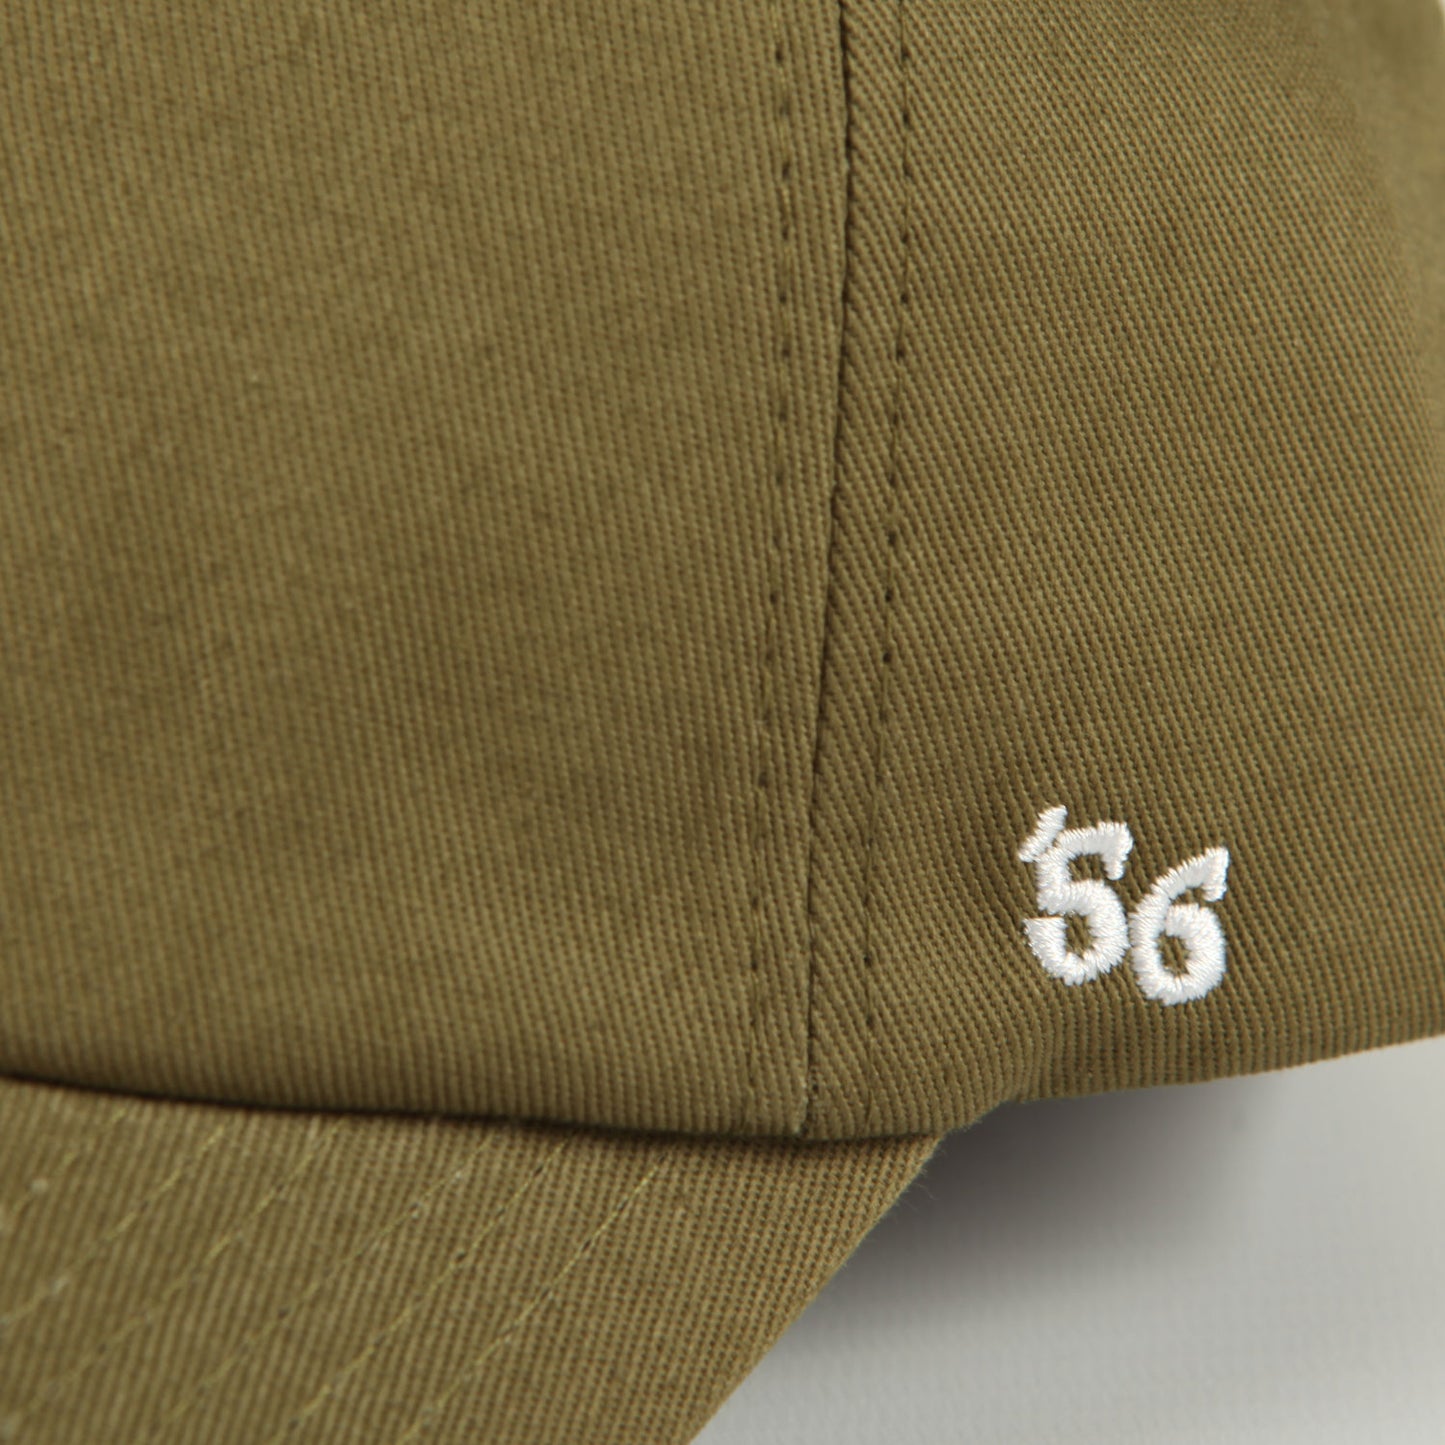 Bronze 56k 'Birates' 6 Panel Cap (Army Green)